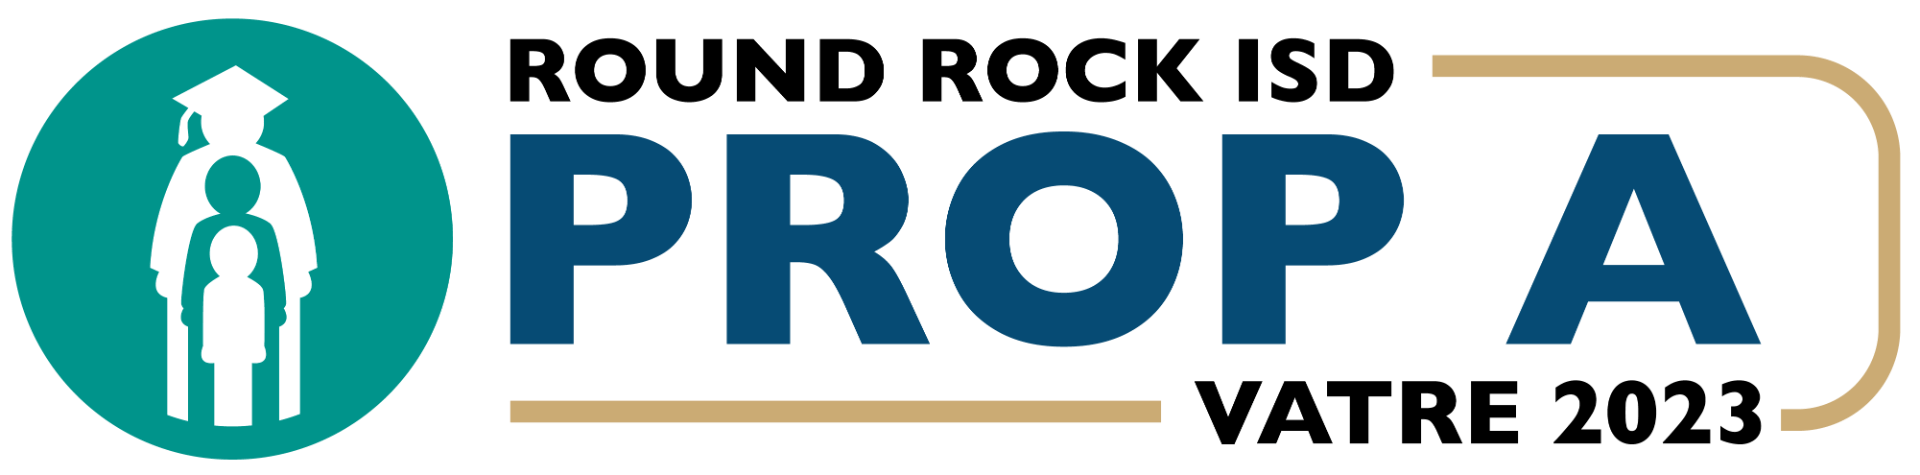 Proposition A VATRE 2023 - Round Rock ISD